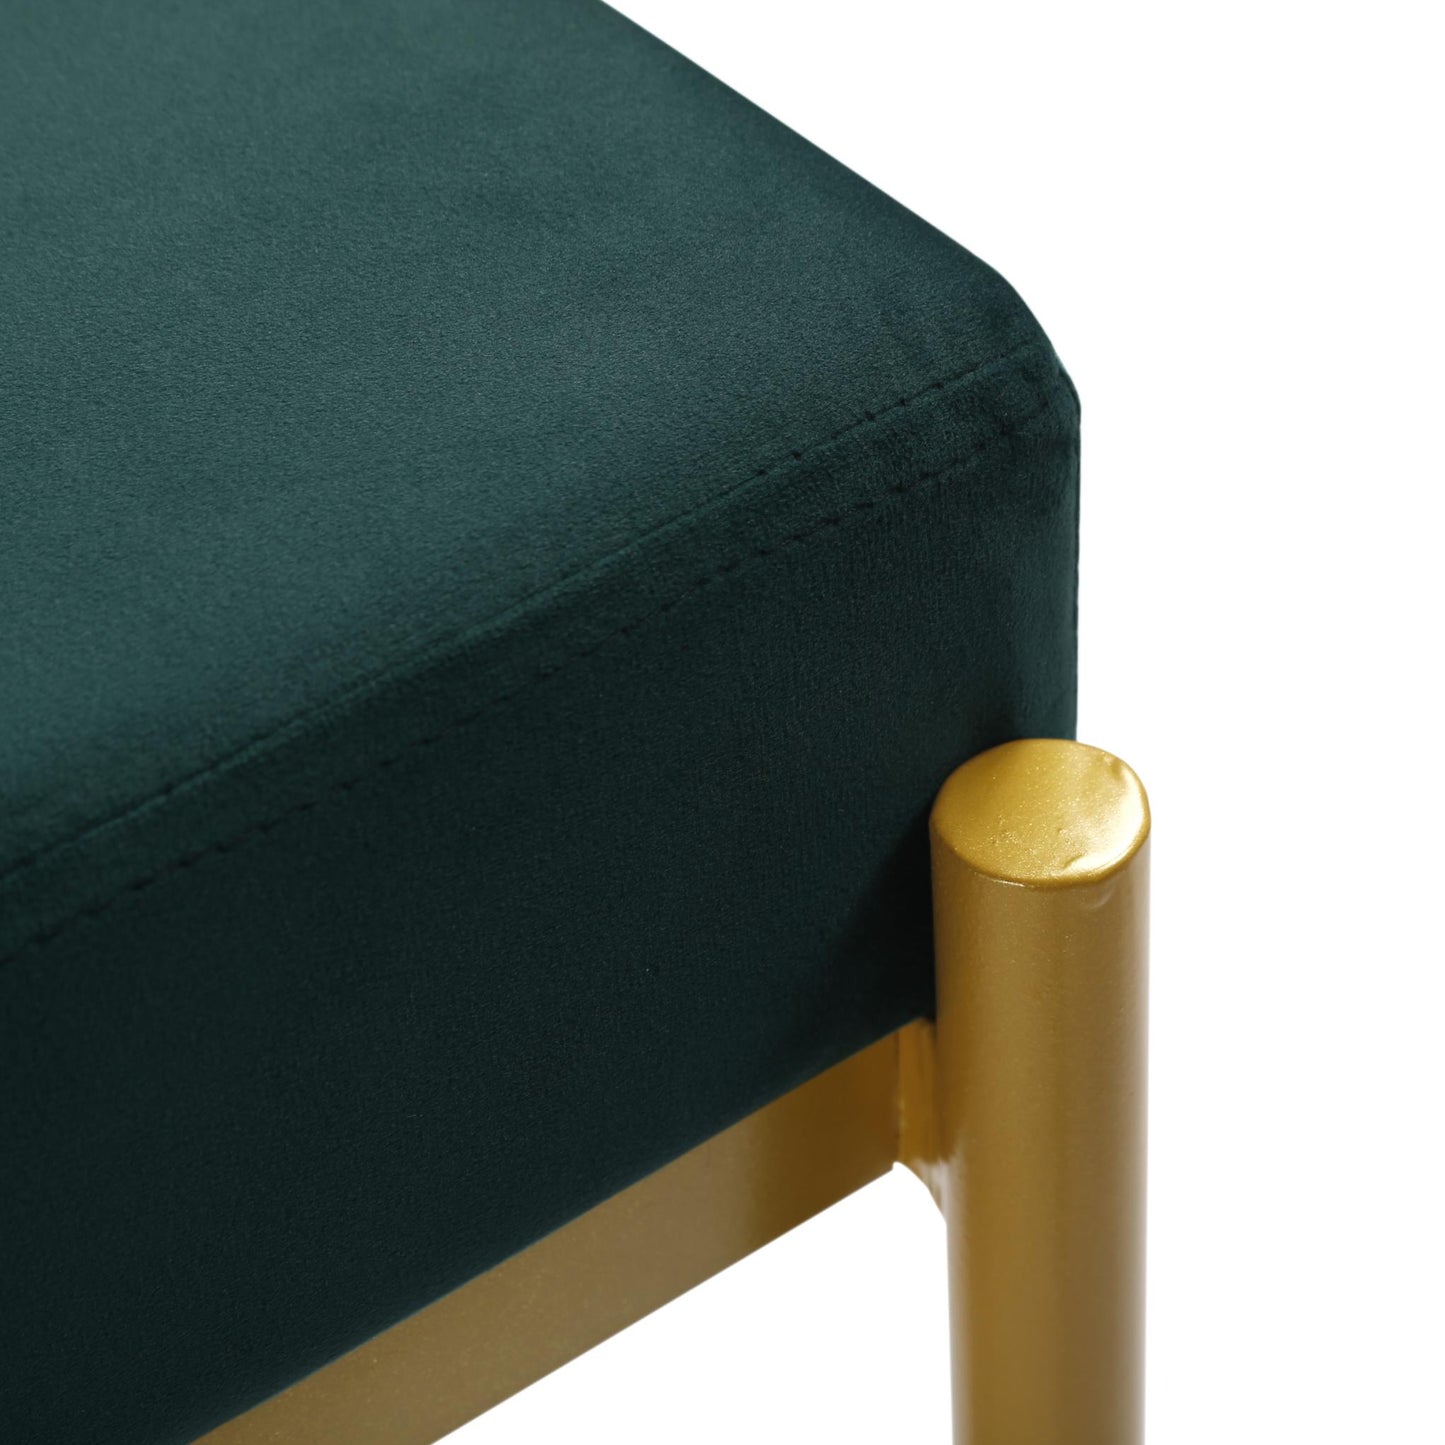 Long Upholstered Bench